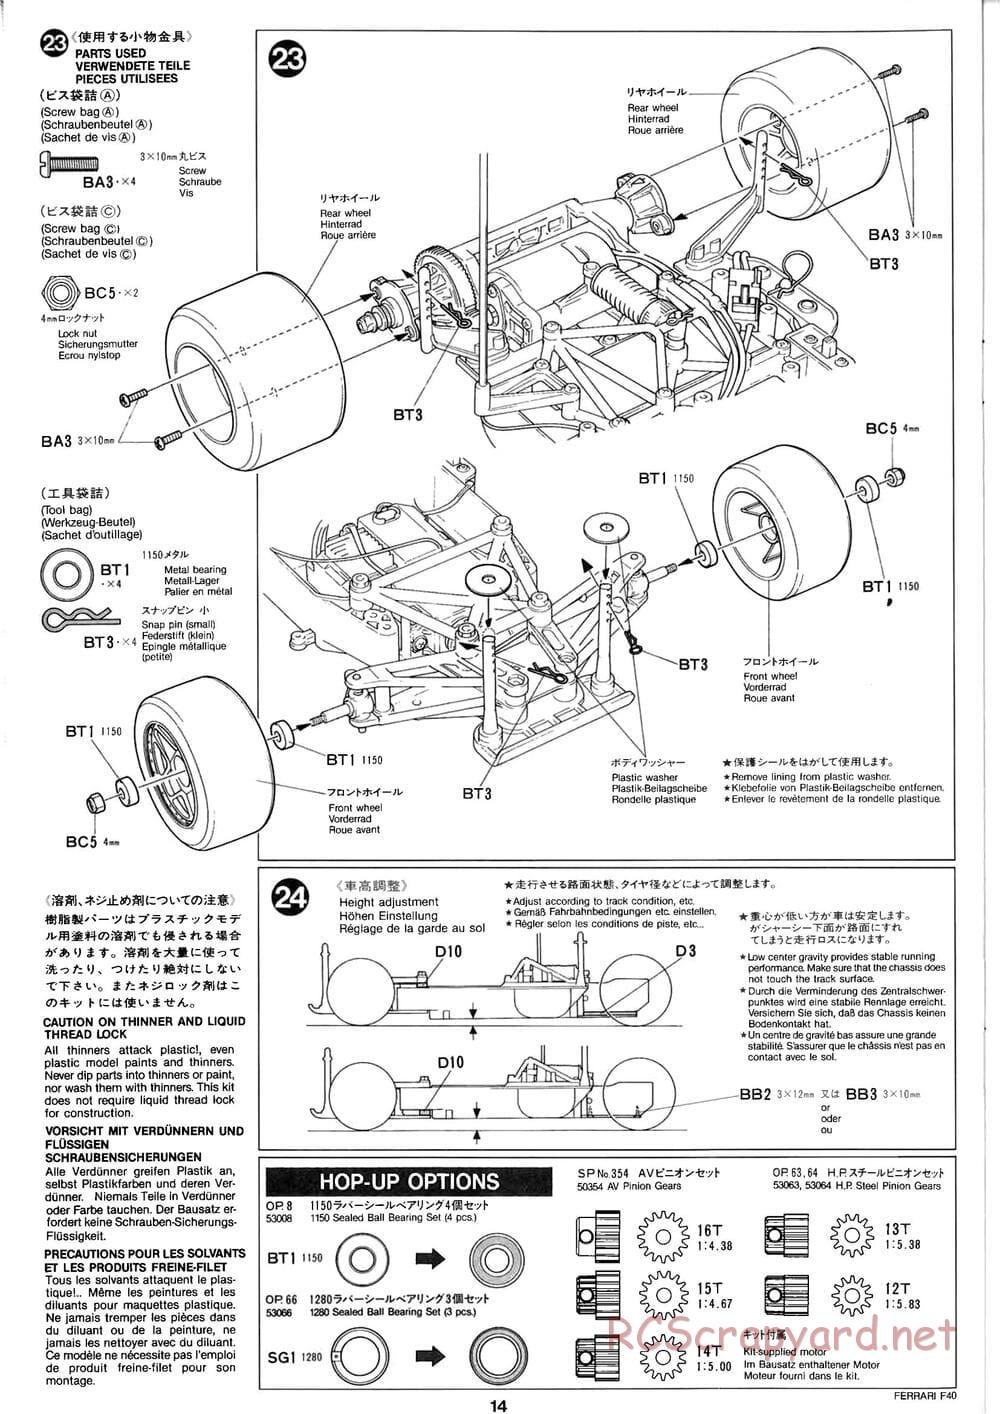 Tamiya - Ferrari F40 - Group-C Chassis - Manual - Page 14